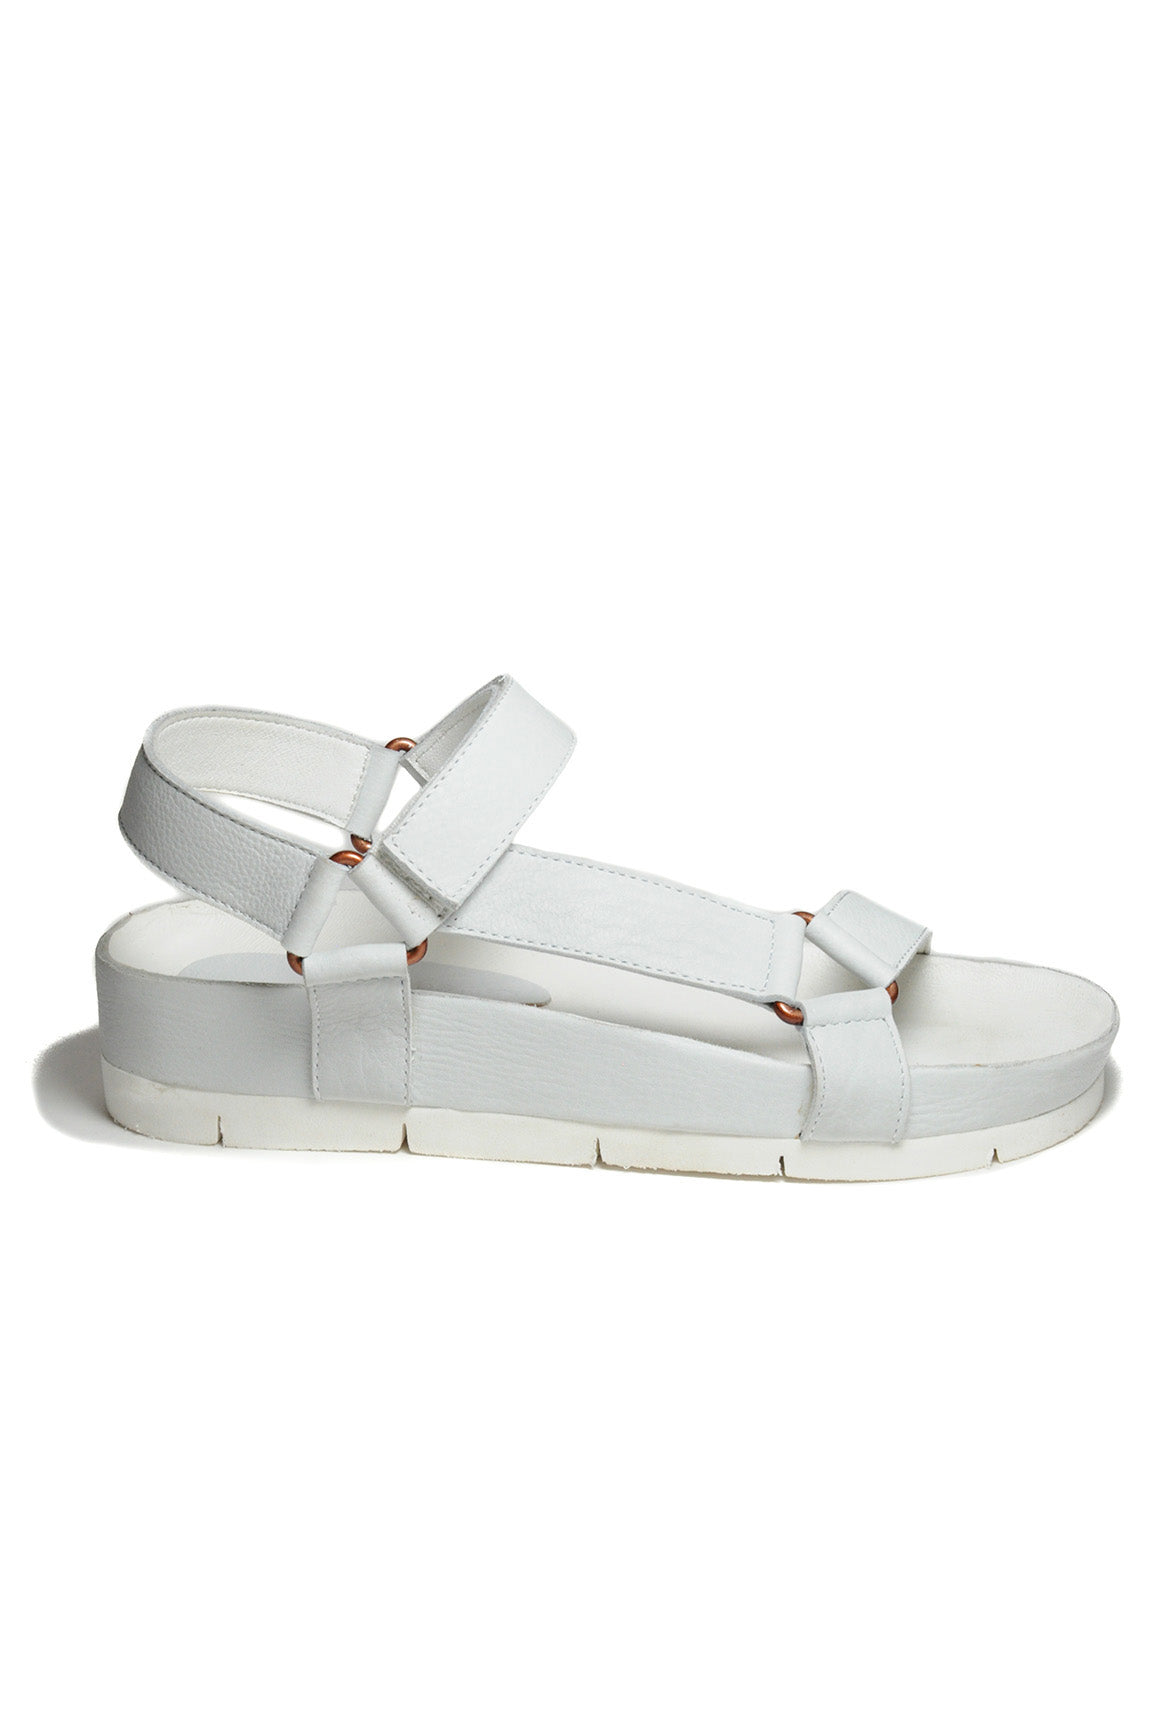 Newport White Leather Sandal Side